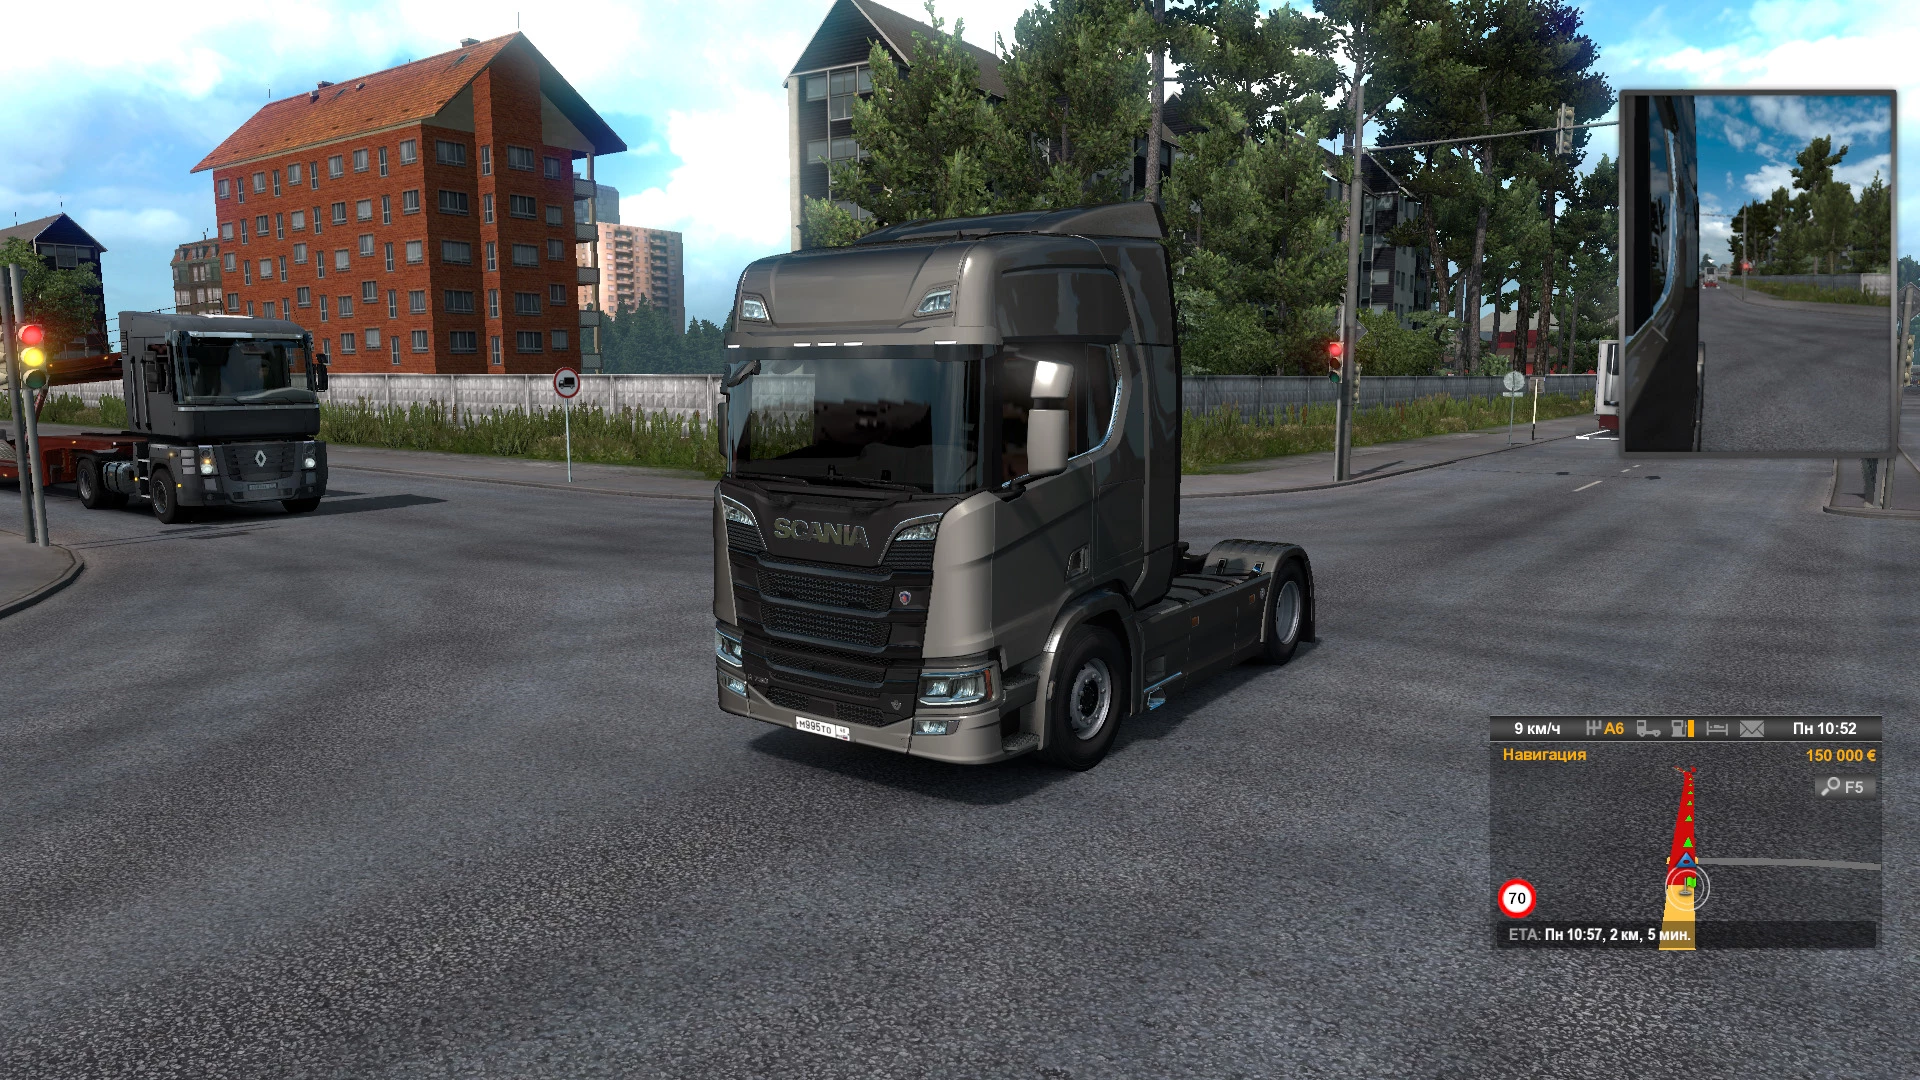 Euro Truck Simulator 2 goes to Russia